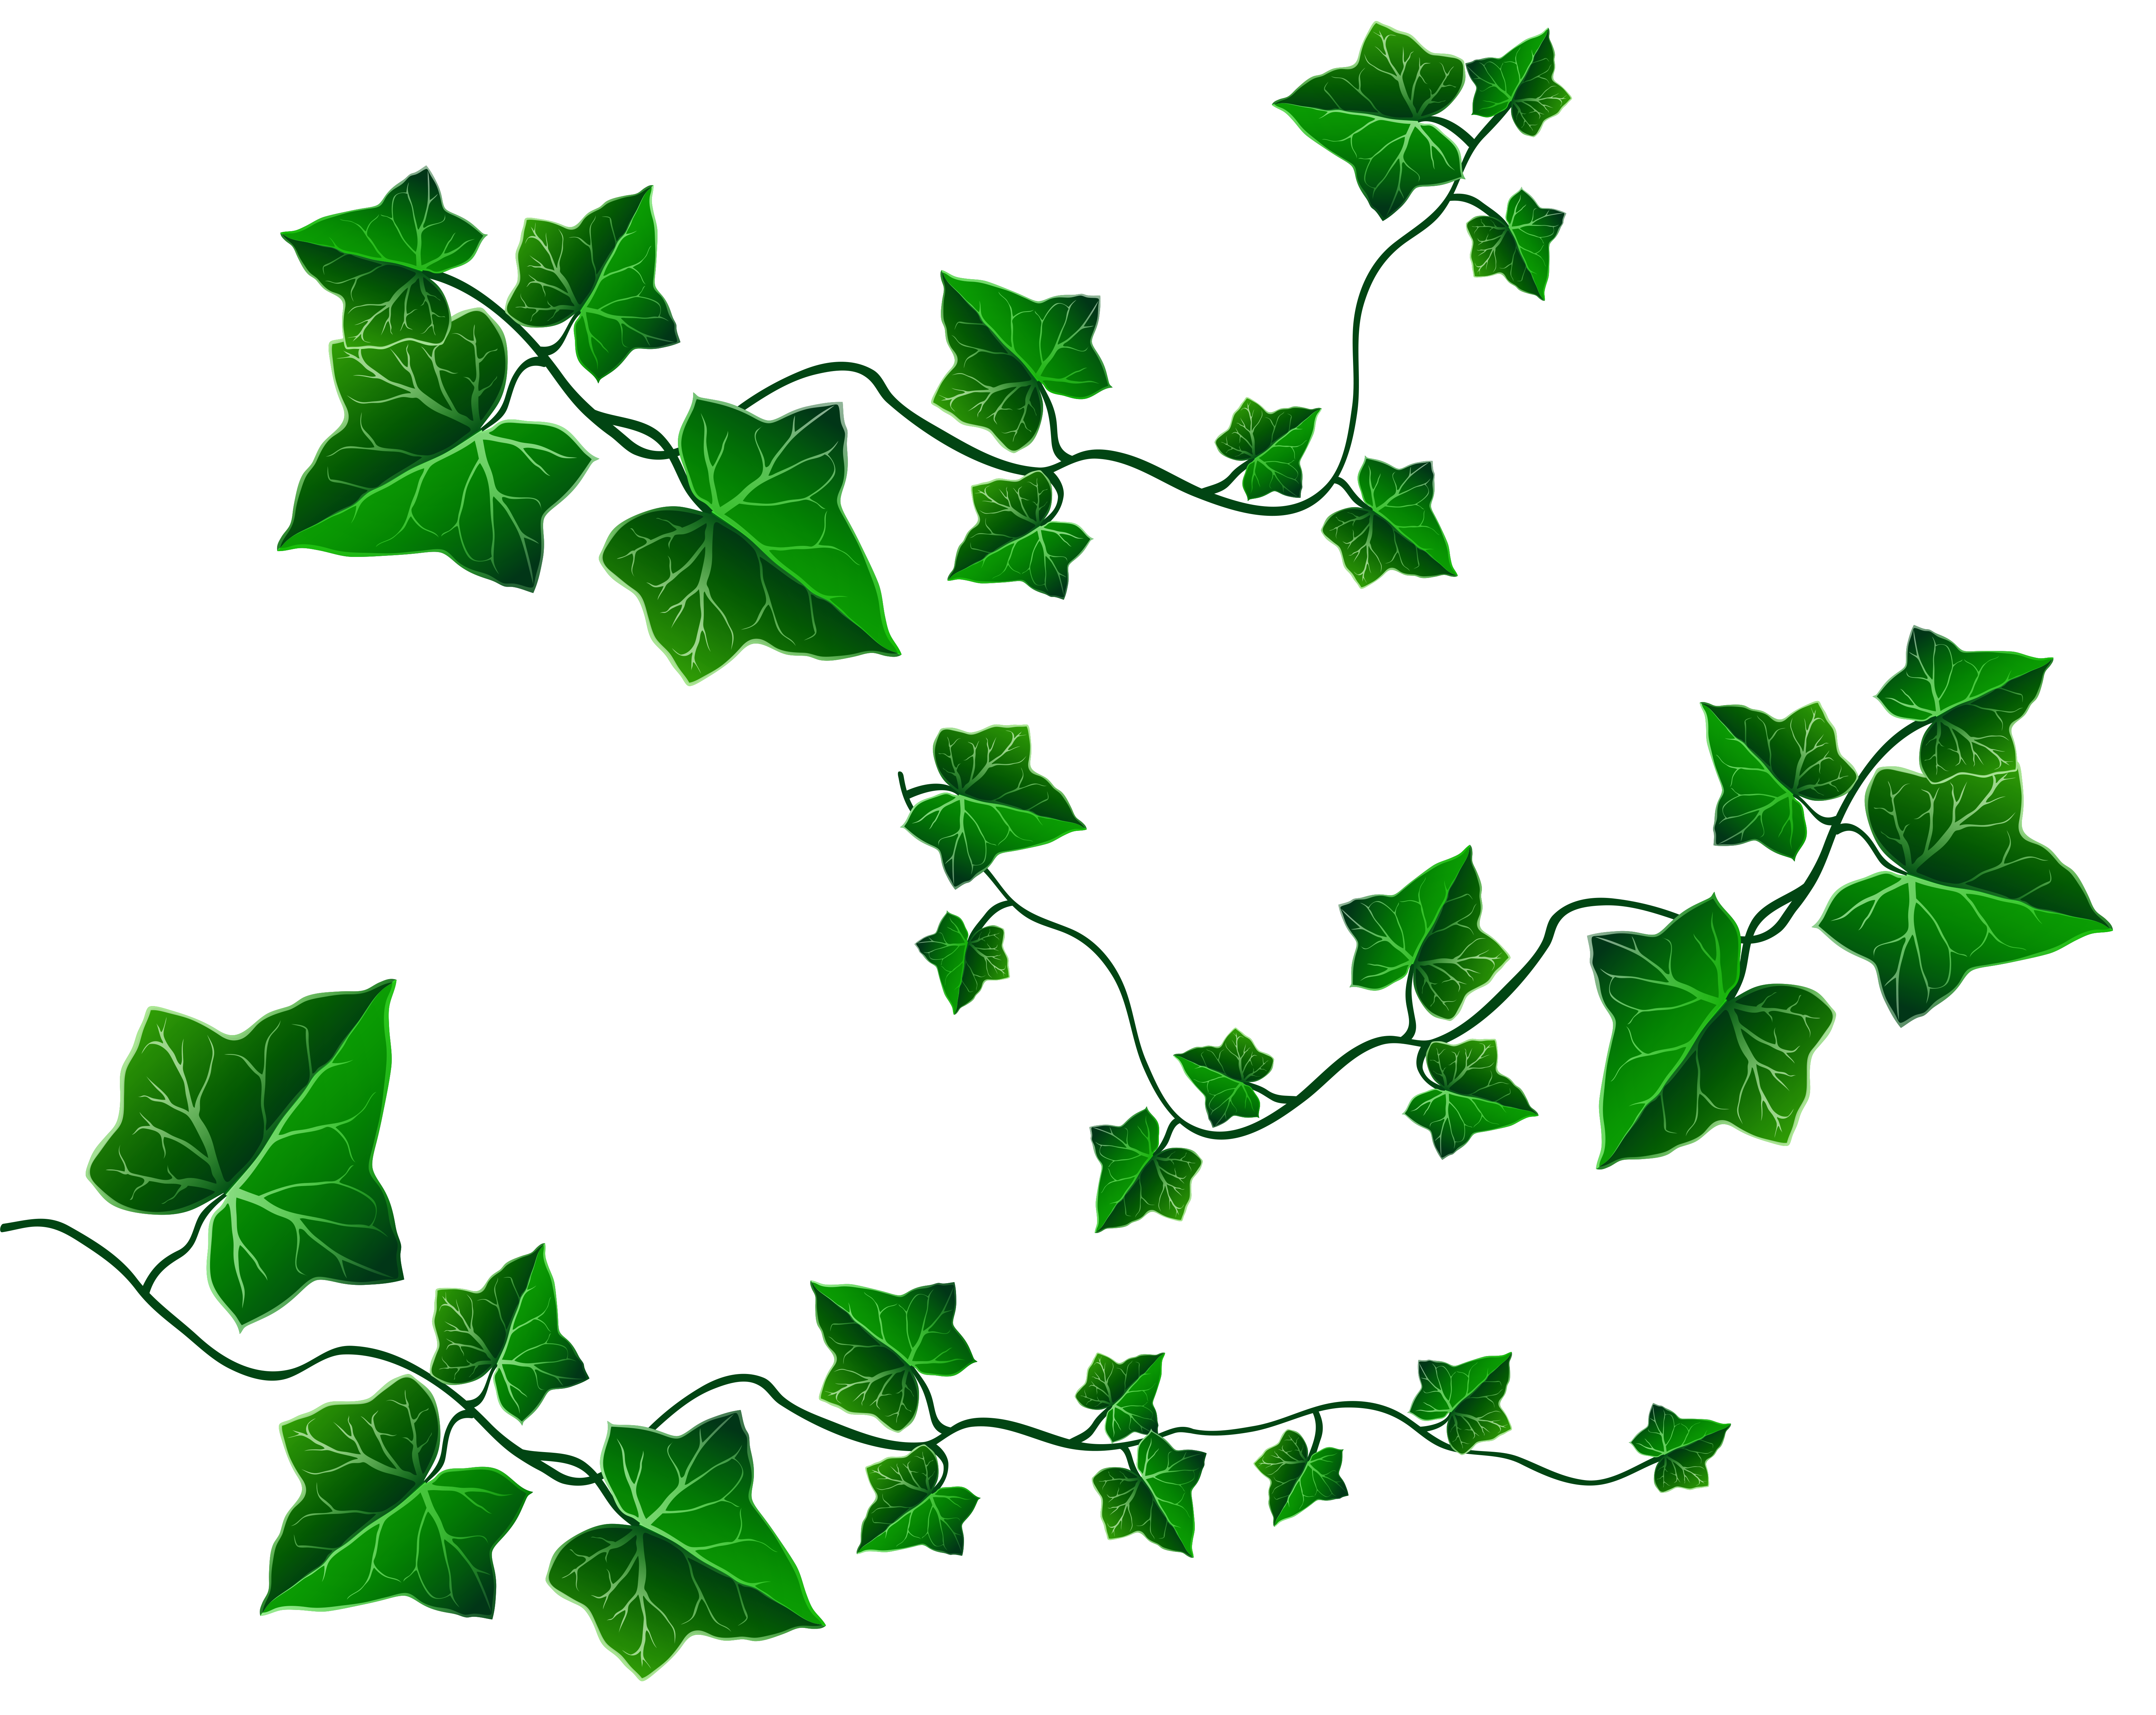 leafy vines clip art